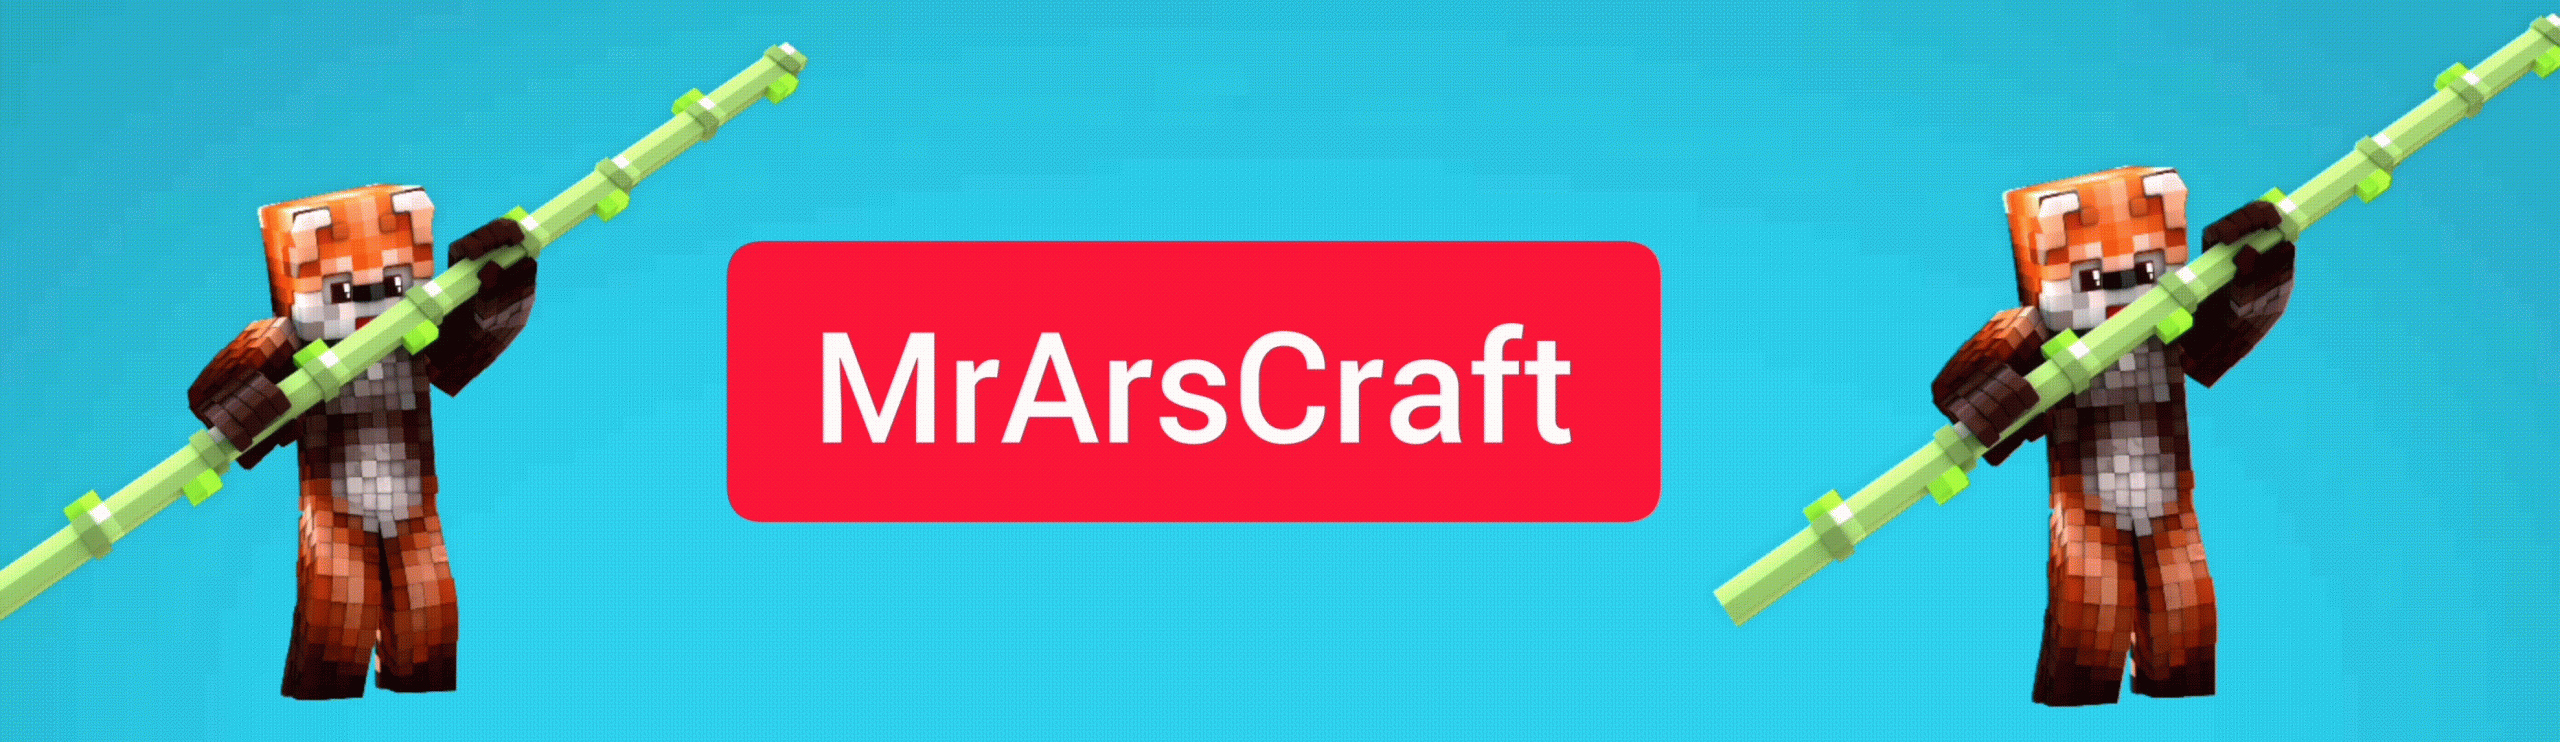 MrArsCraft